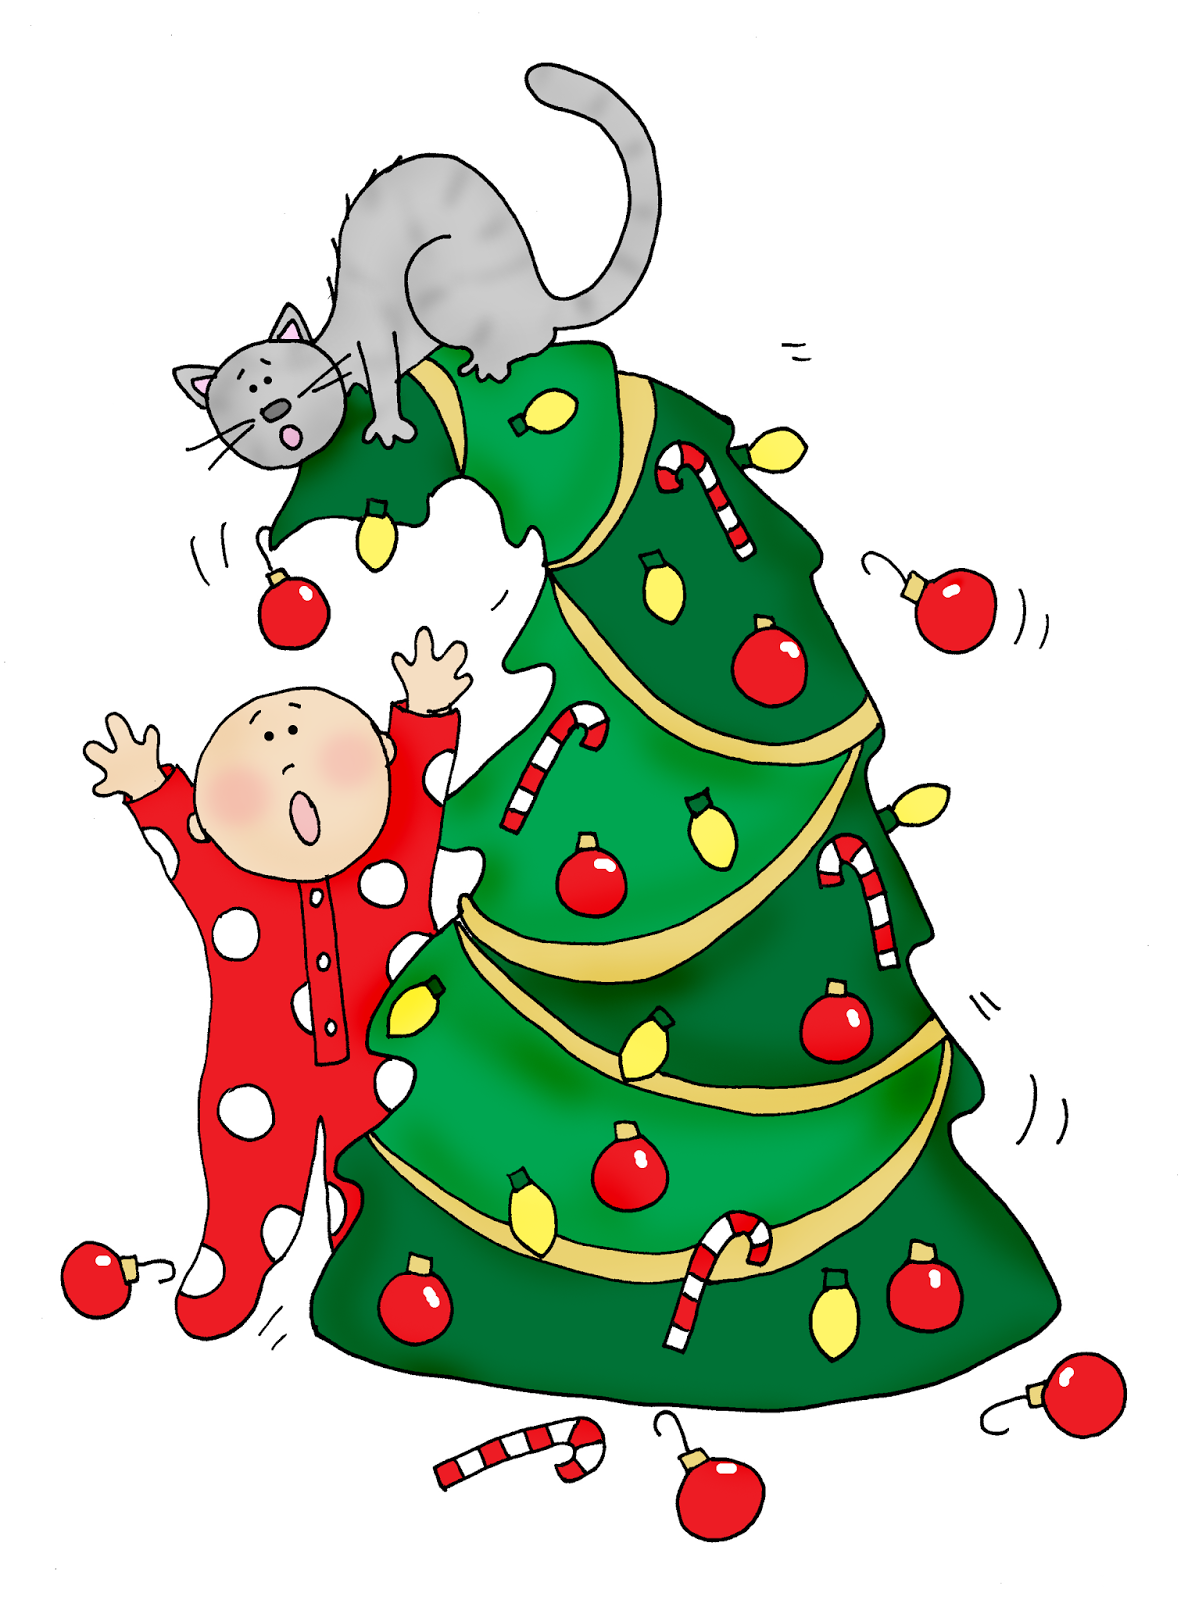 https://4.bp.blogspot.com/-j92YHvxuGIA/UoxuMhyifNI/AAAAAAAACXw/sWYCeVjE2Pg/s1600/Christmas+Cat-color.png